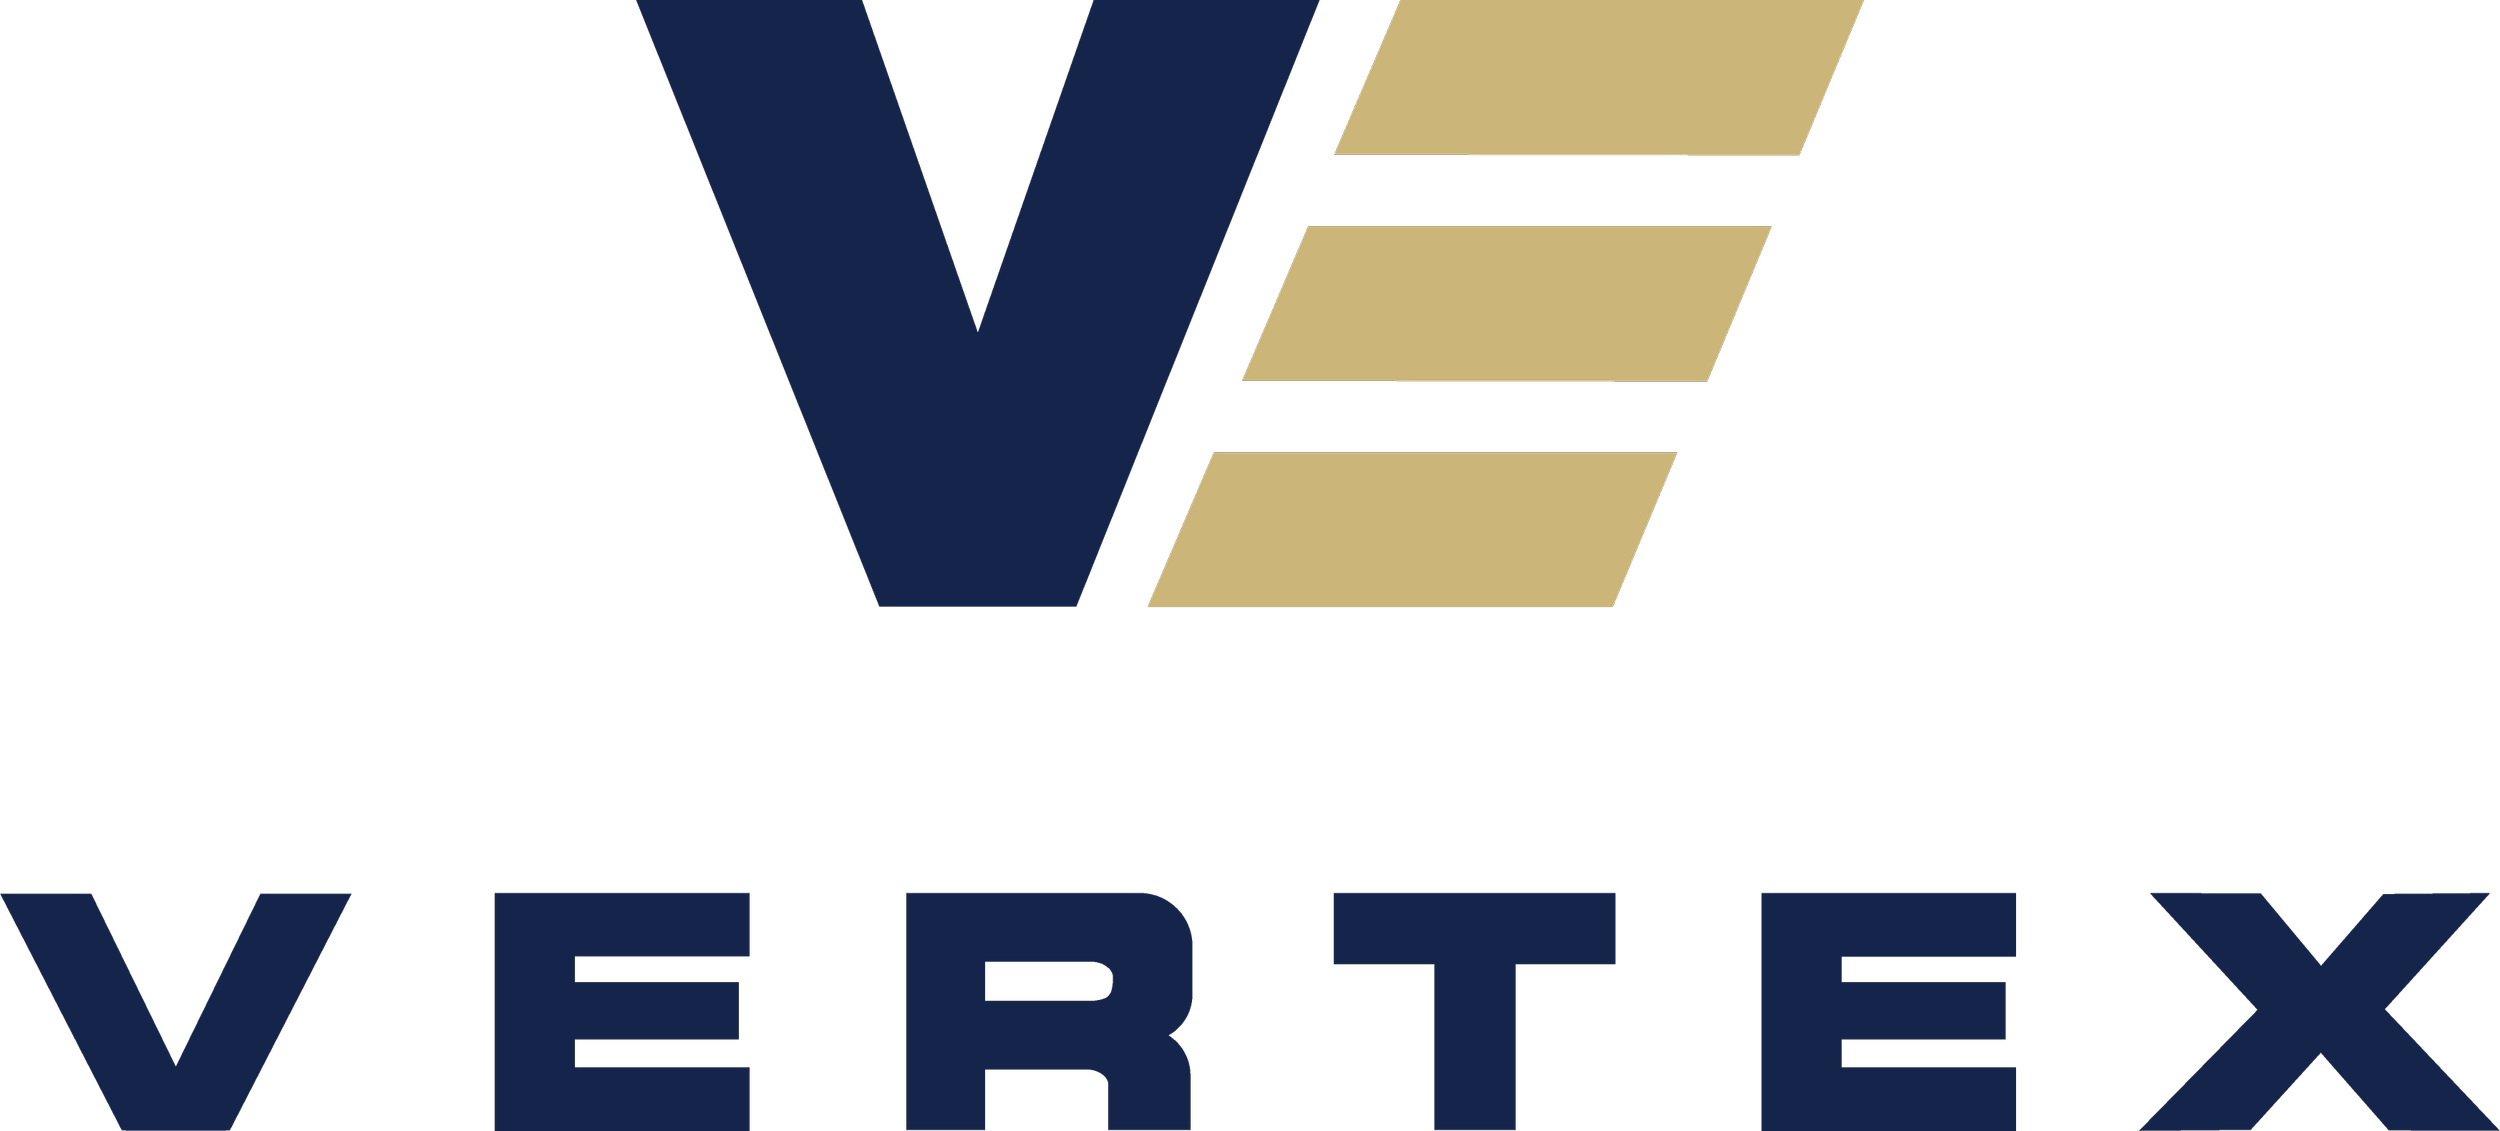 Vertex Logo.png